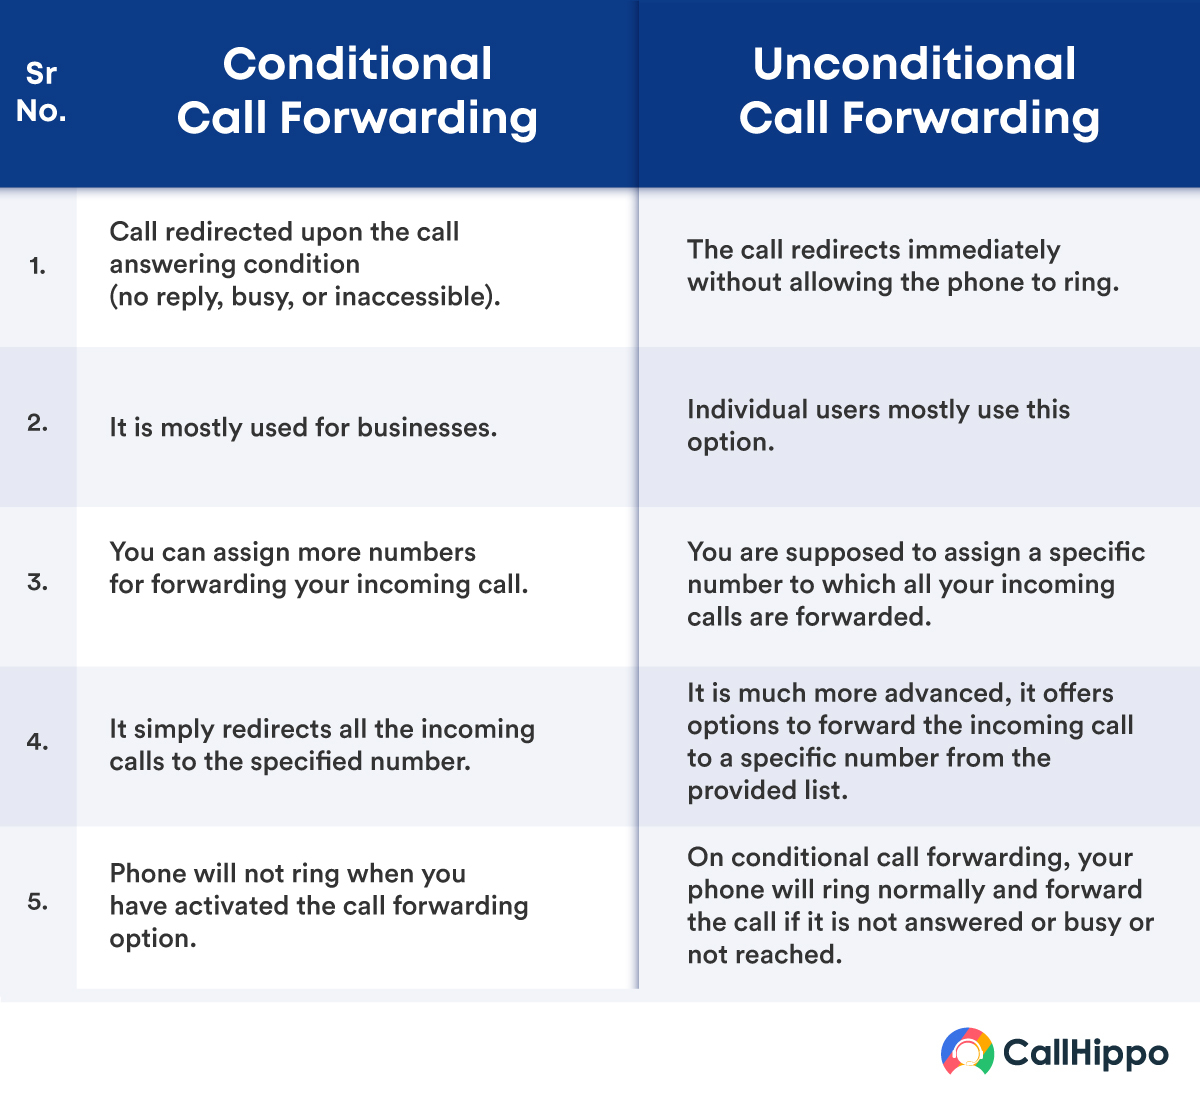 Conditional Call Forwarding Vs Unconditional Call Forwarding